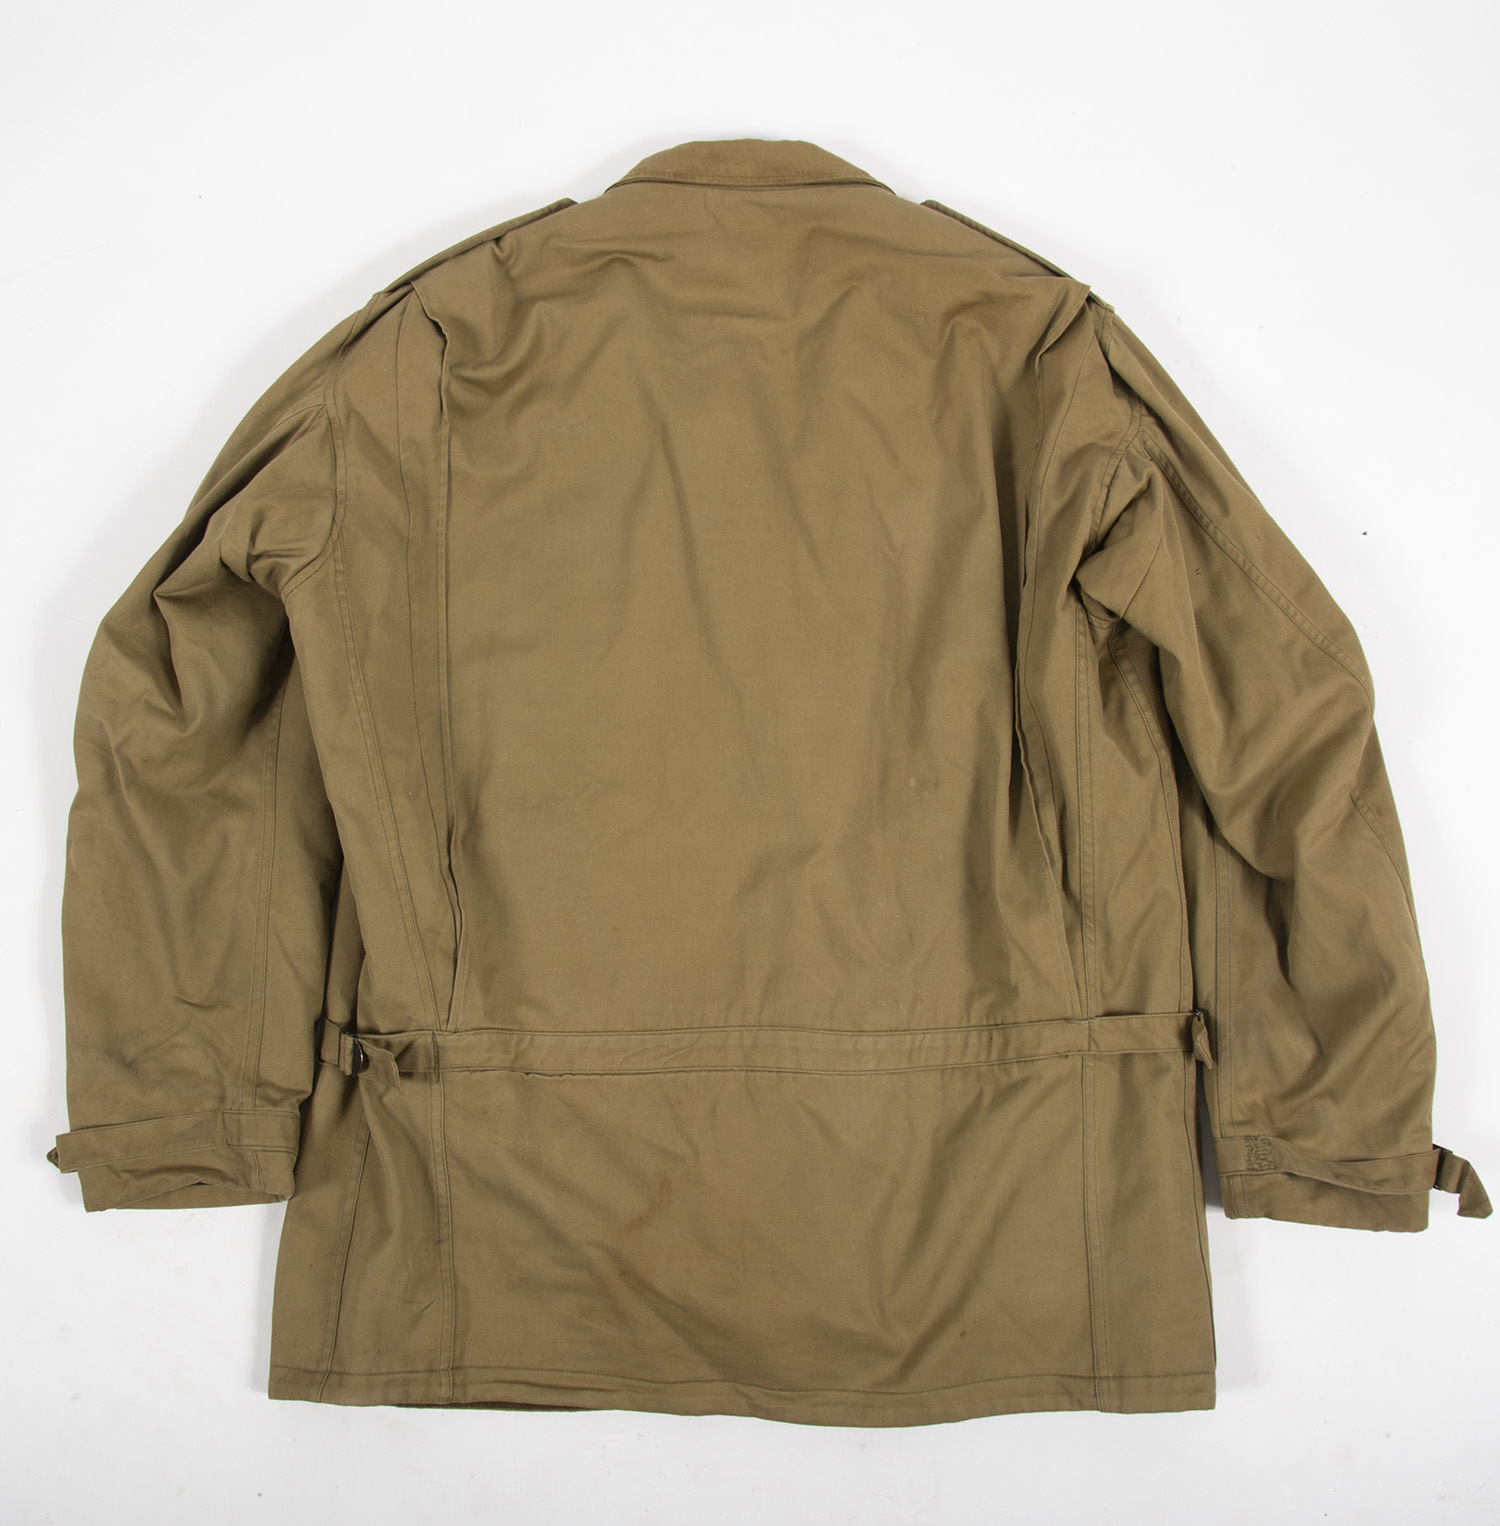 Original Arctic M41 Jacket, size 46L